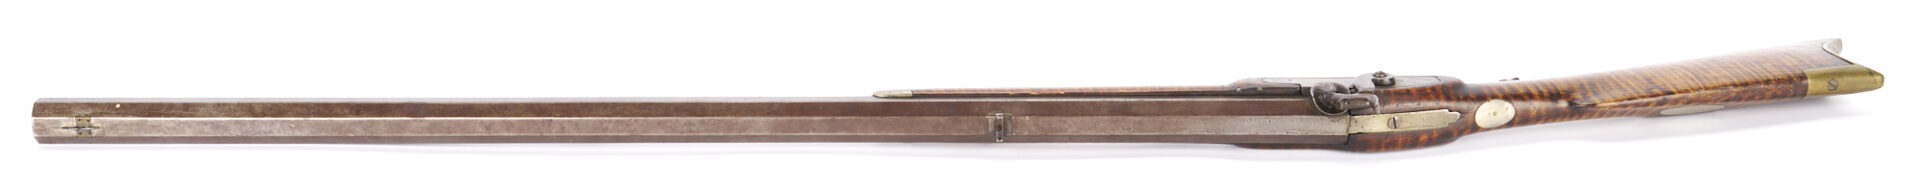 Lot 525: J. Griffith .52 cal Muzzleloading Rifle; Cincinnati; Walter Cline Collection